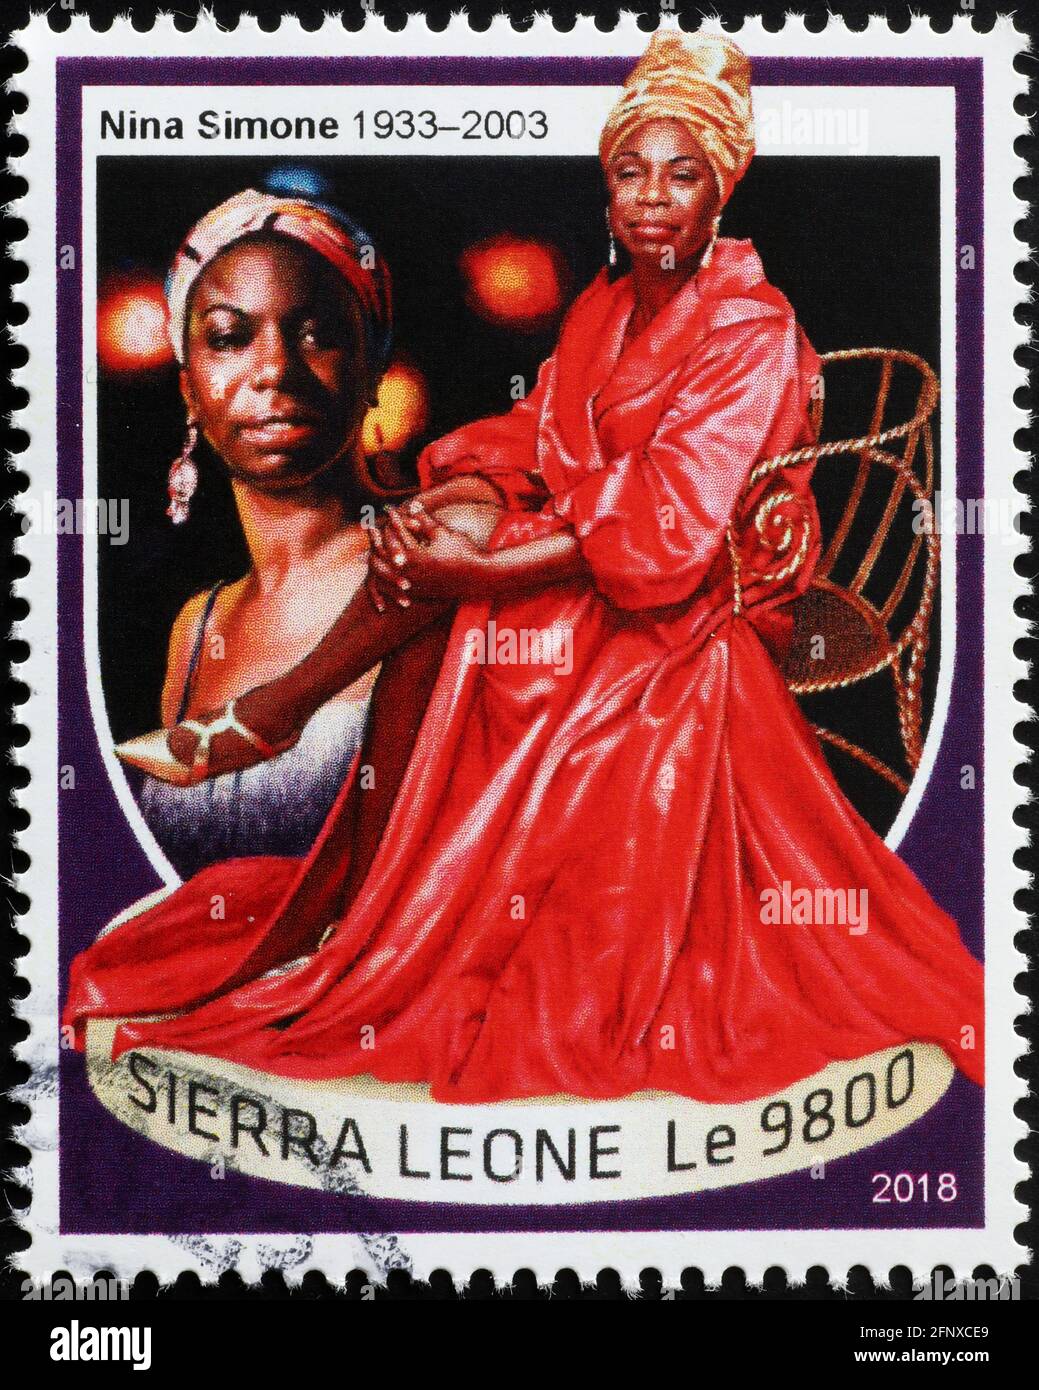 Portrait of Nina Simone on postage stamp Stock Photo